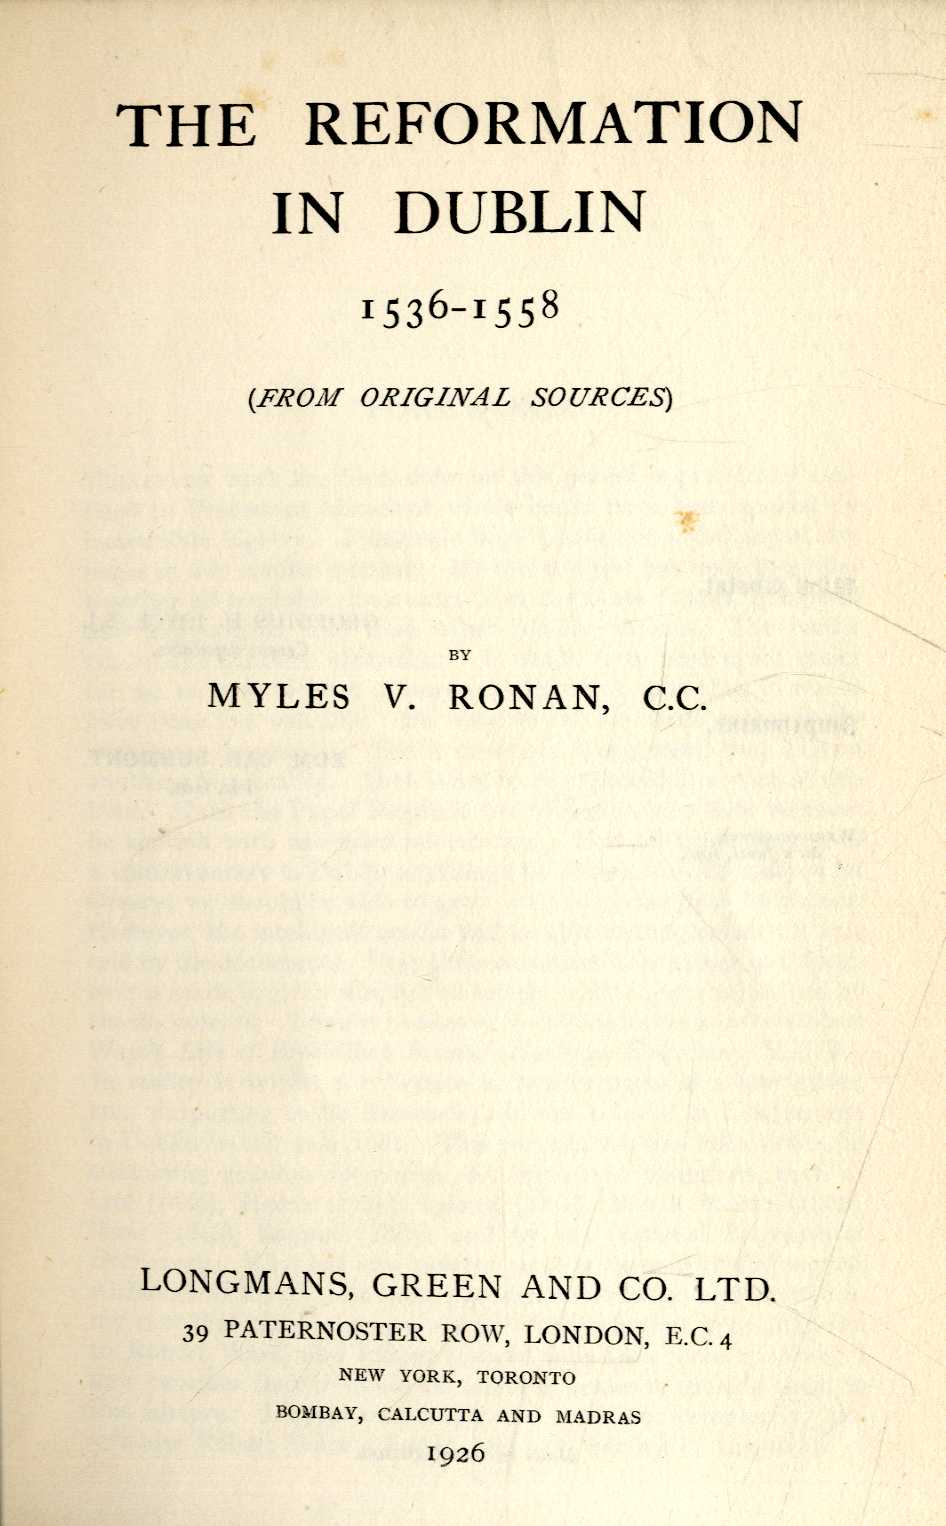 Ronan (Myles V.) The Reformation in Dublin, 1536 - 1558, also The Reformation in Ireland Under